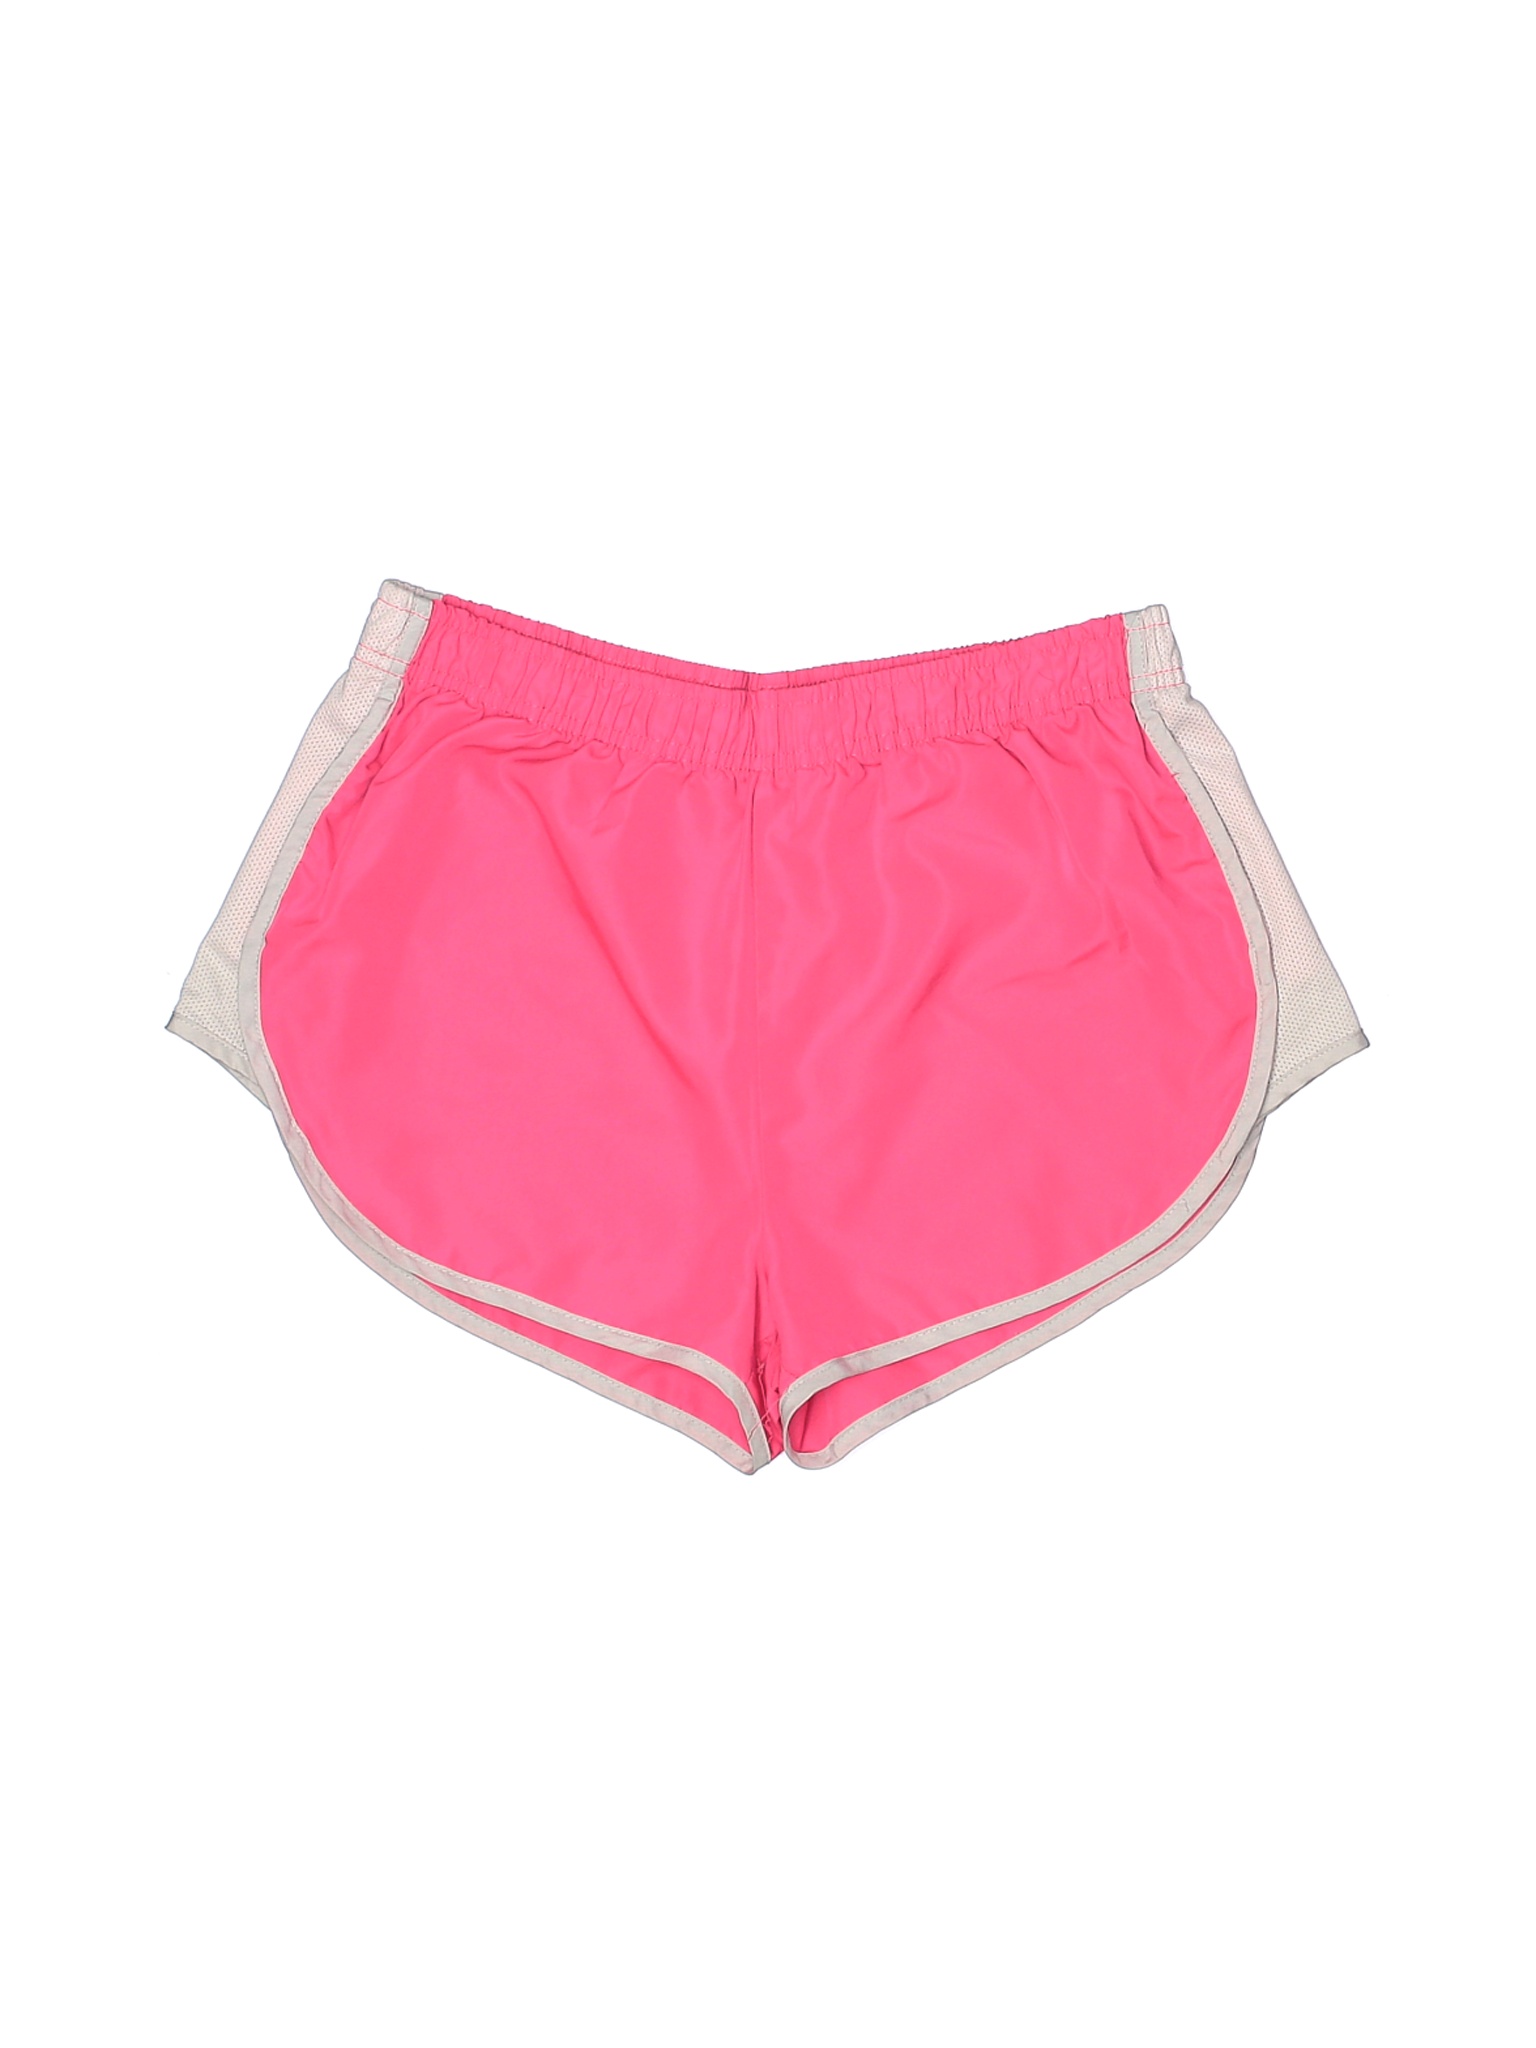 B Sport Women Pink Athletic Shorts L | eBay